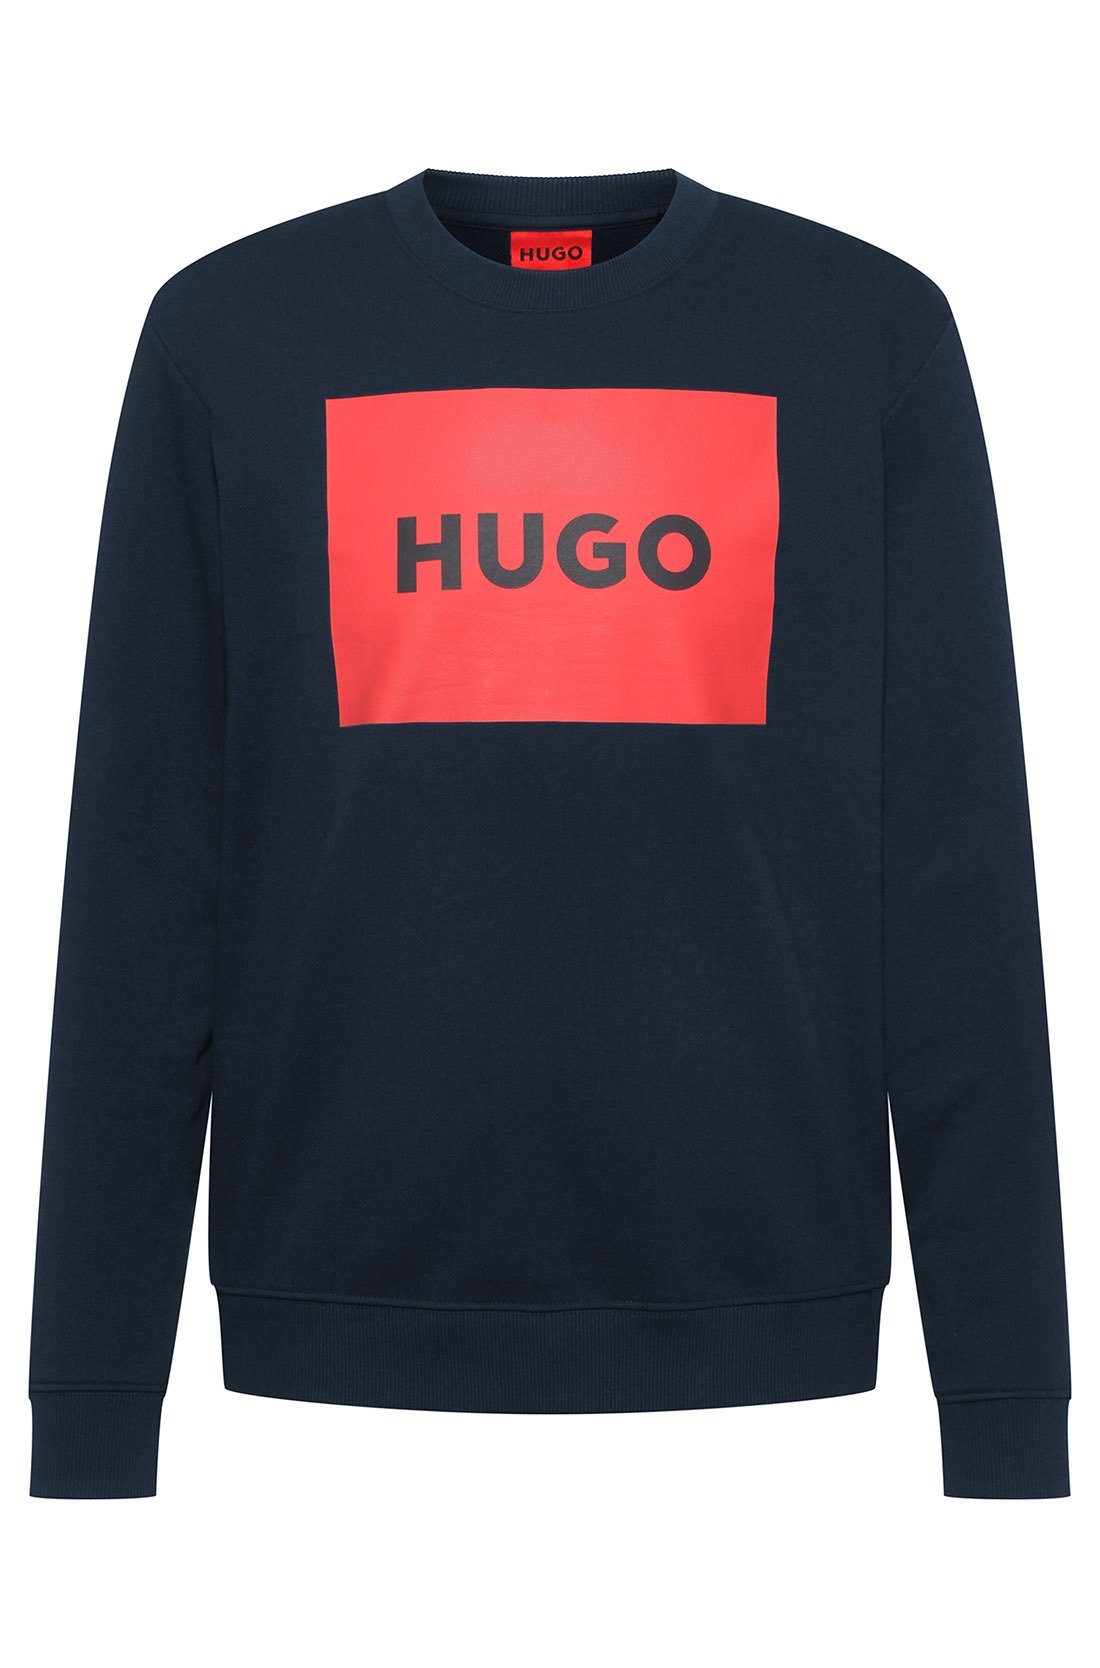 HUGO Sweatshirt Herren Sweater - Duragol222, Sweatshirt, Rundhals Dunkelblau